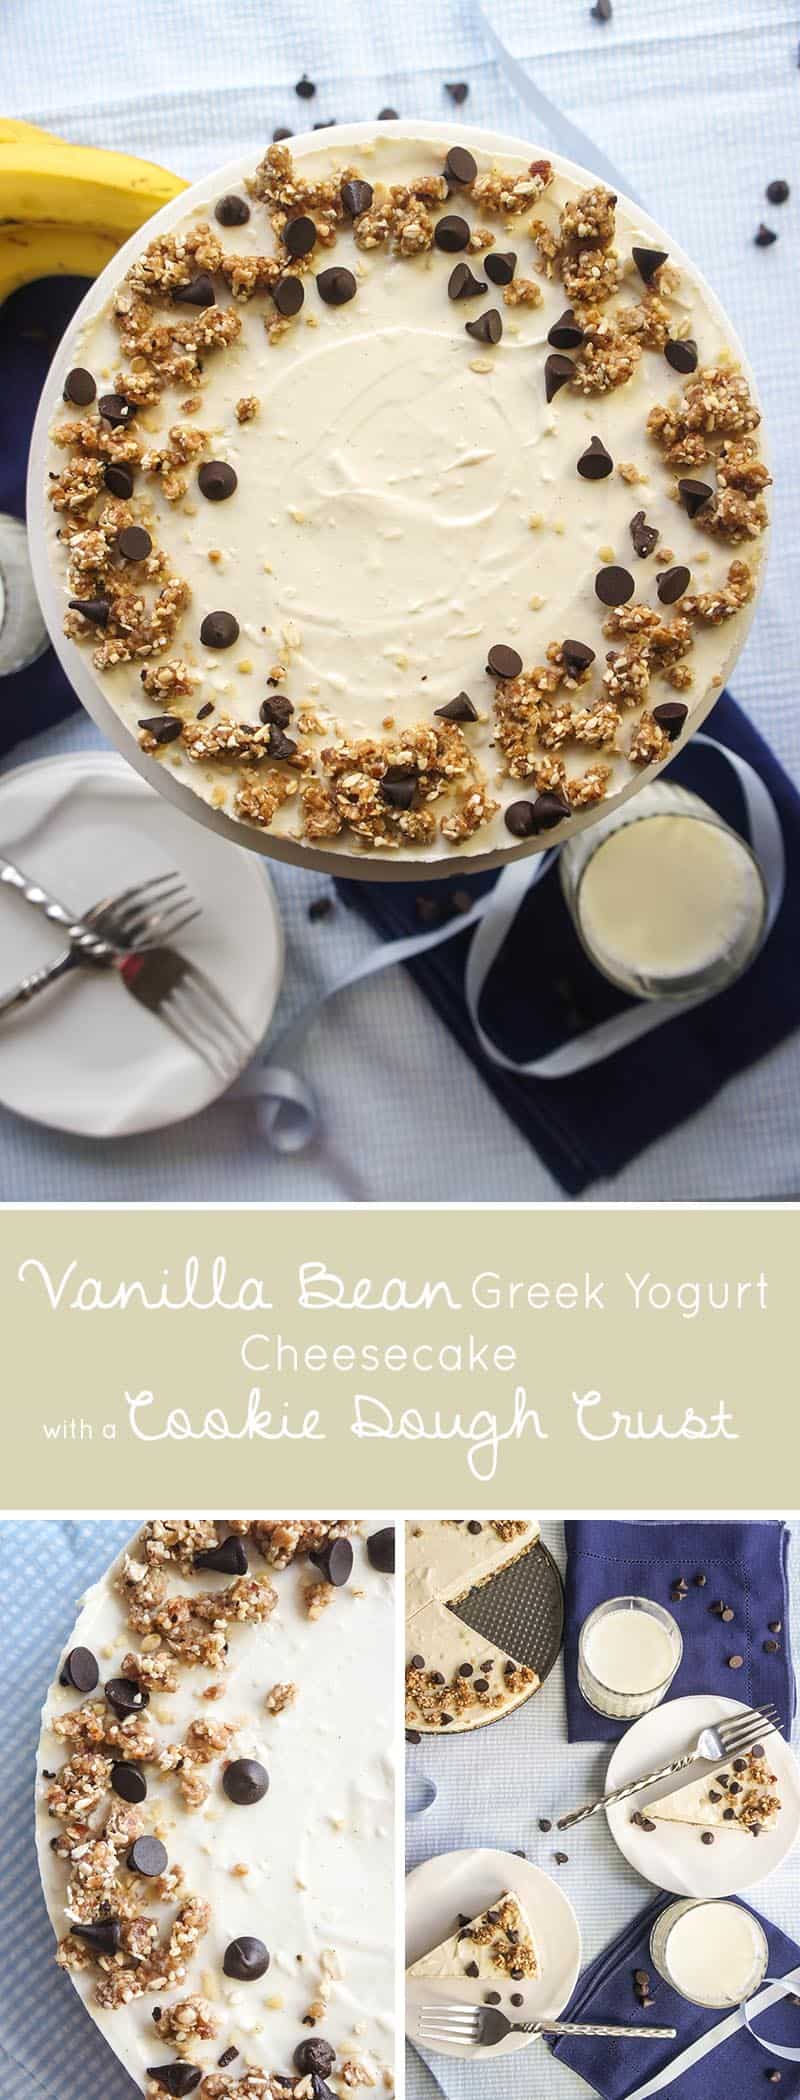 Greek Yogurt Cheesecake with Cookie Dough Crust